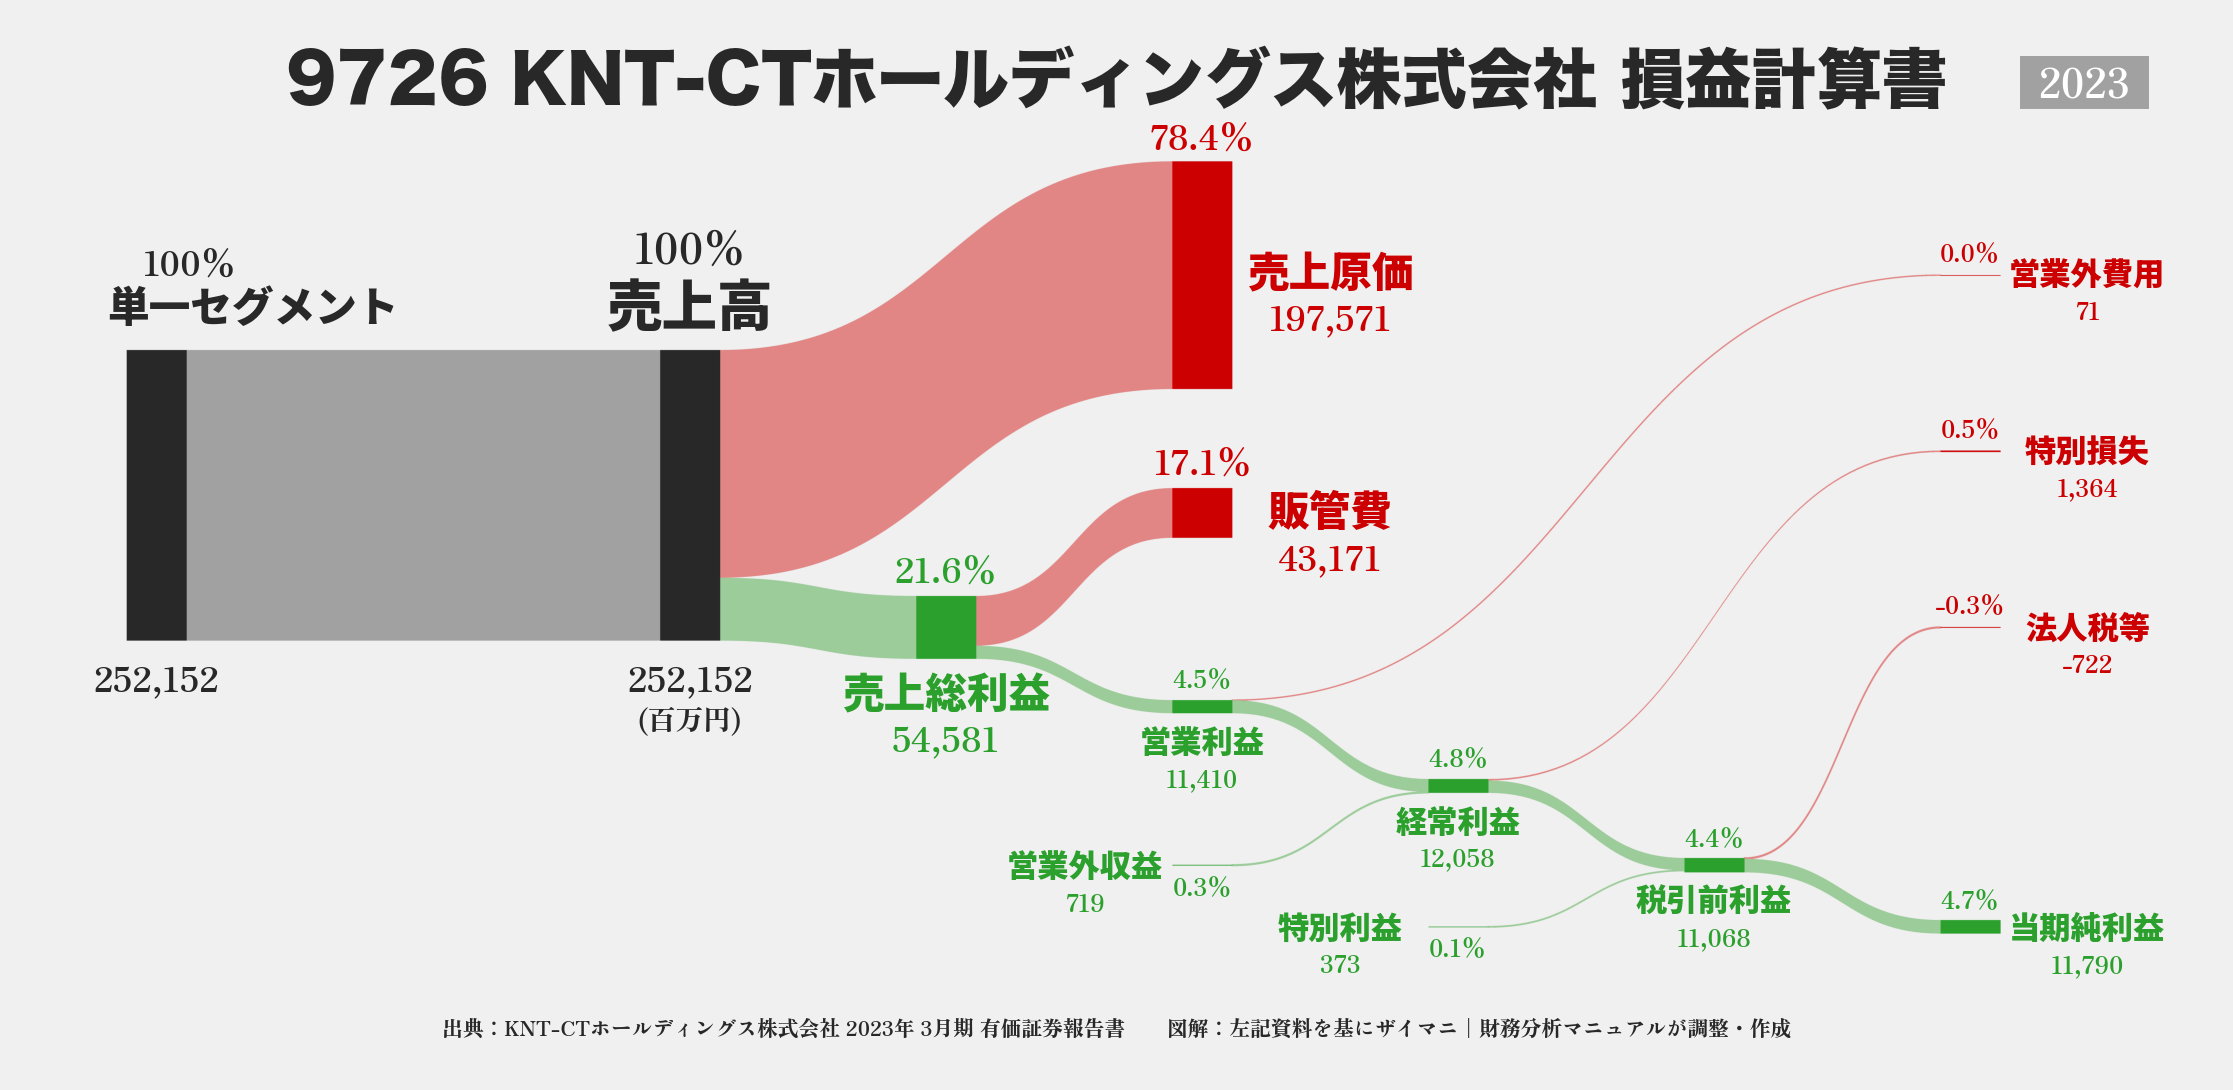 KNT-CTHD｜9726の損益計算書サンキーダイアグラム図解資料